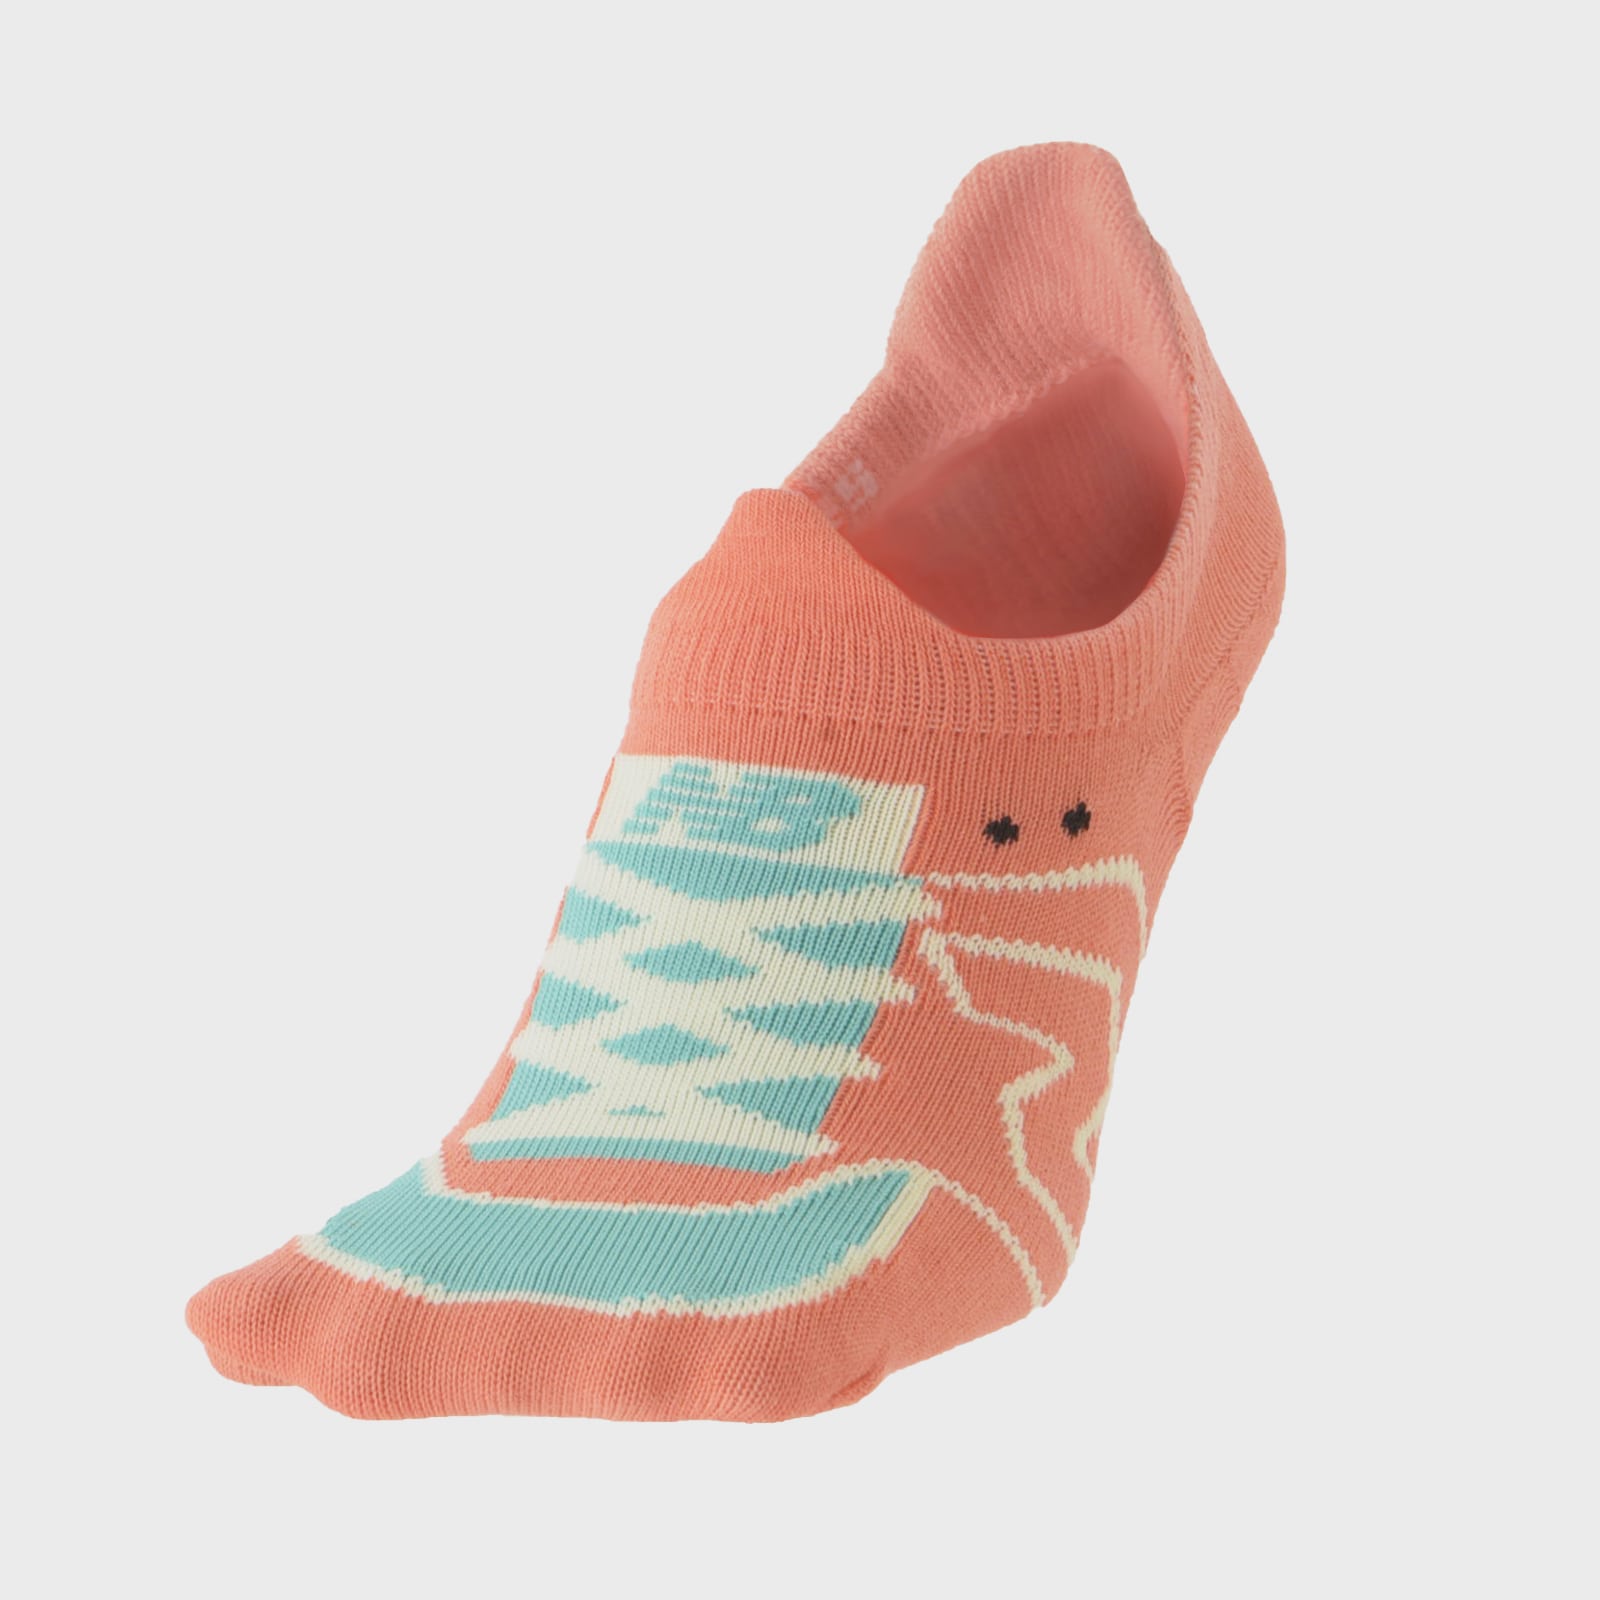 Nagoya Women's Marathon Sneaker Socks Special Edition